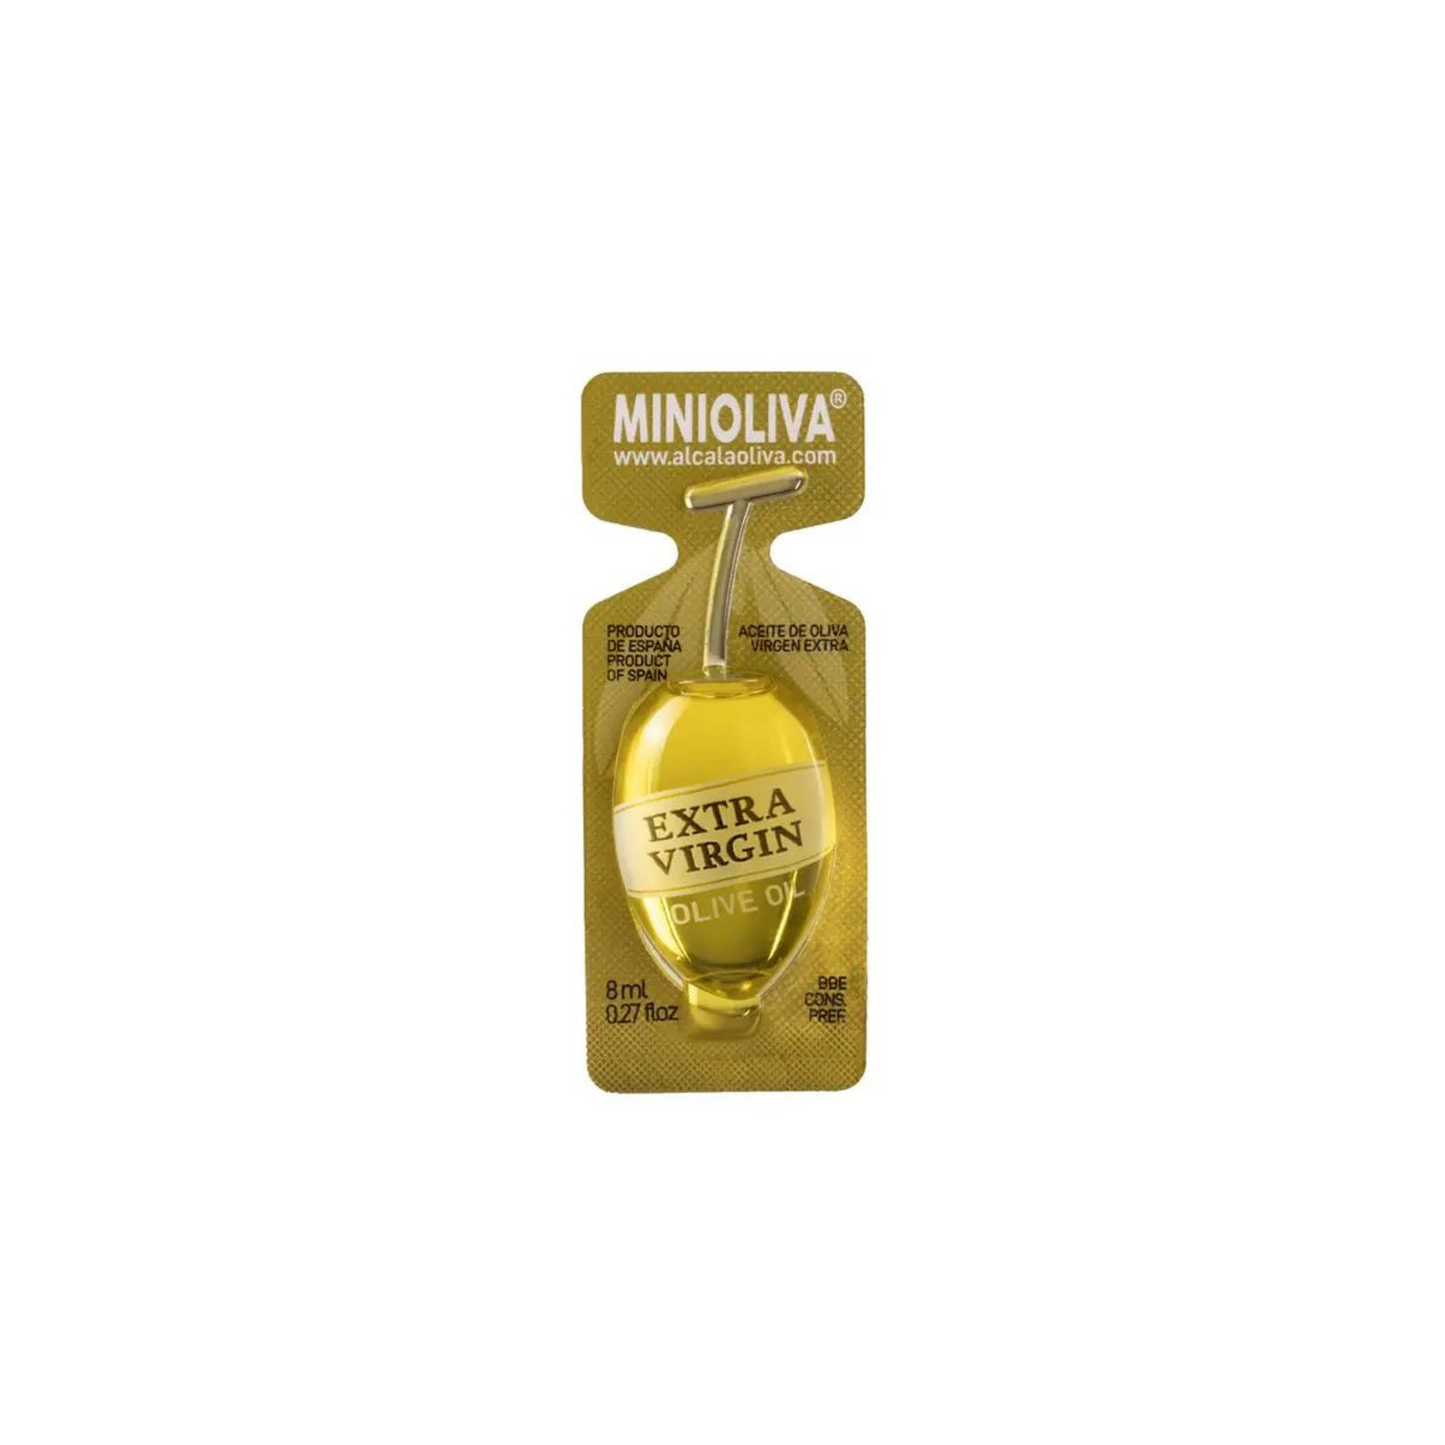 Minioliva - Premium Olive Oil Single Serve Packets